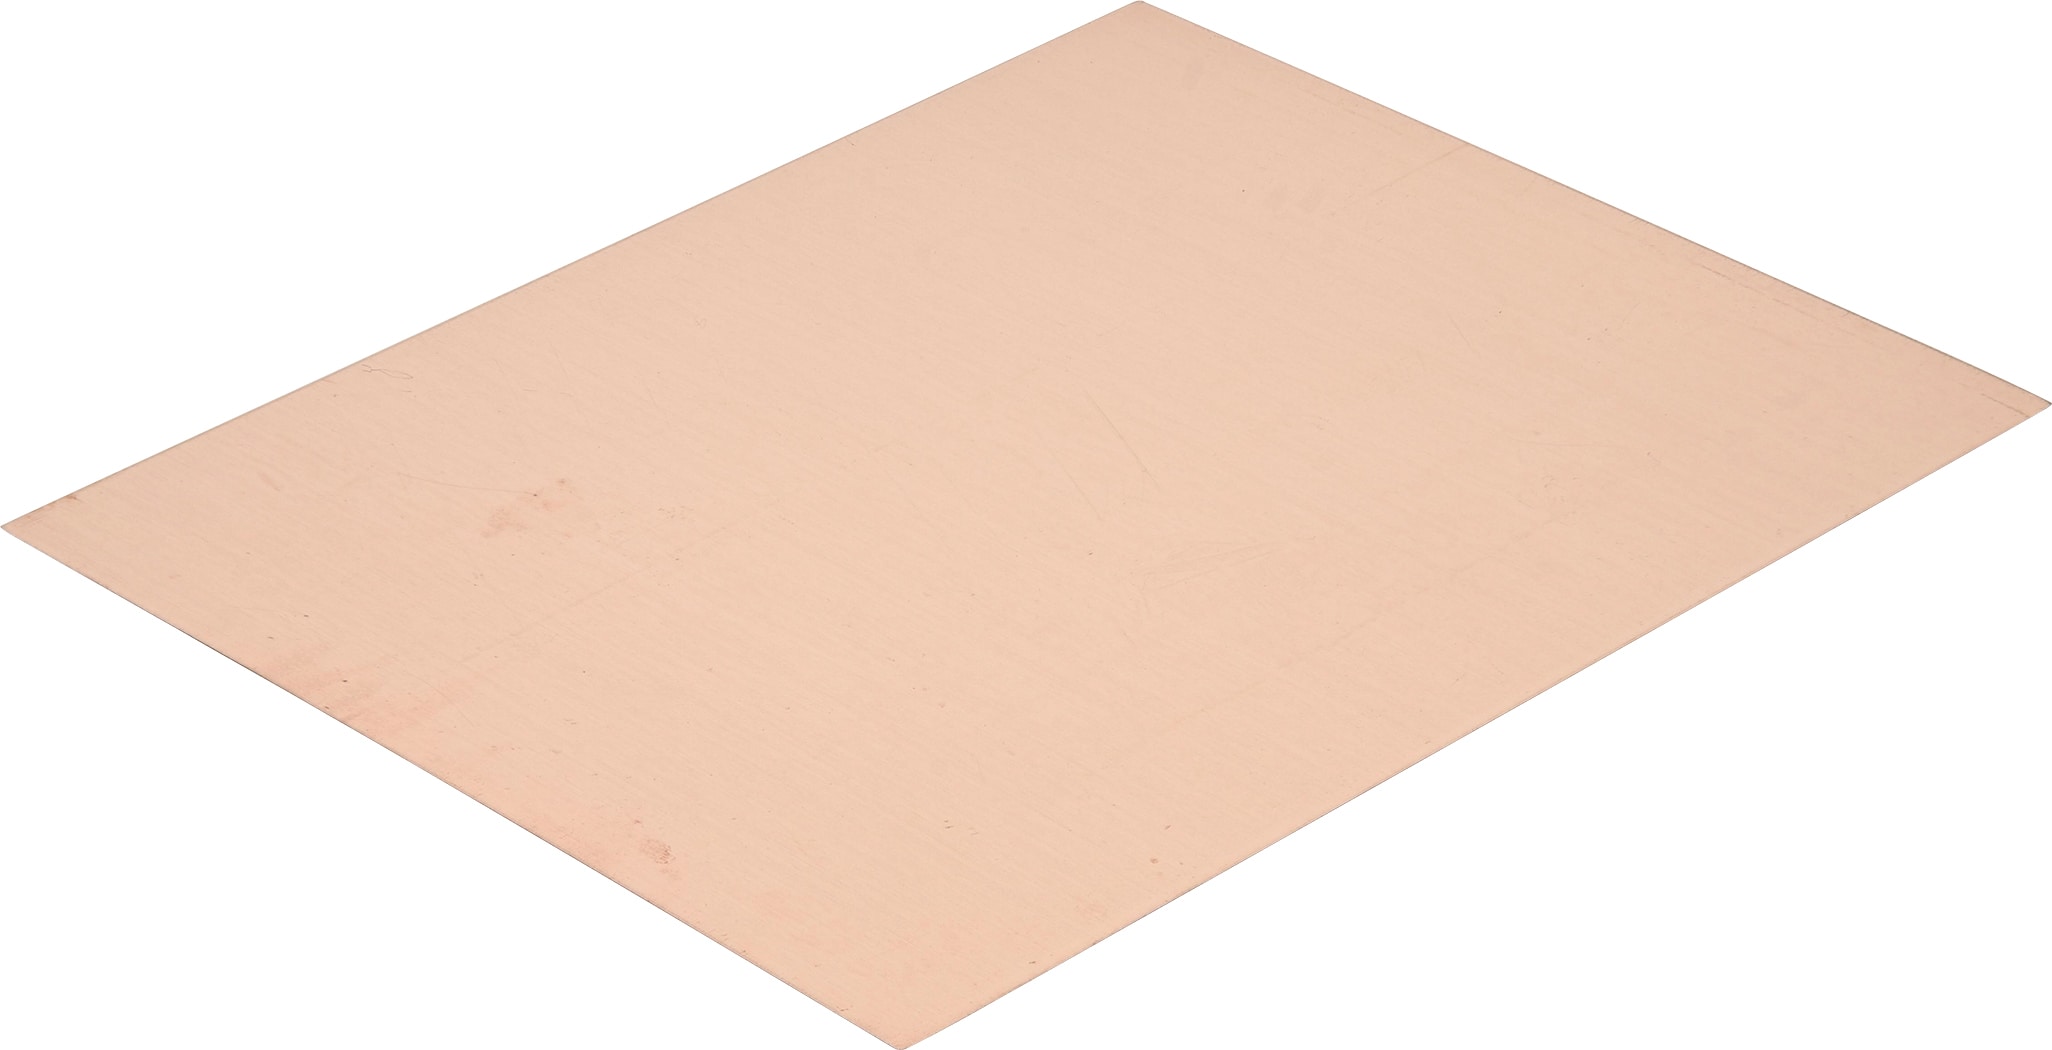 48 oz 1/16" Flat Copper Sheet Plate 11" x 11" 